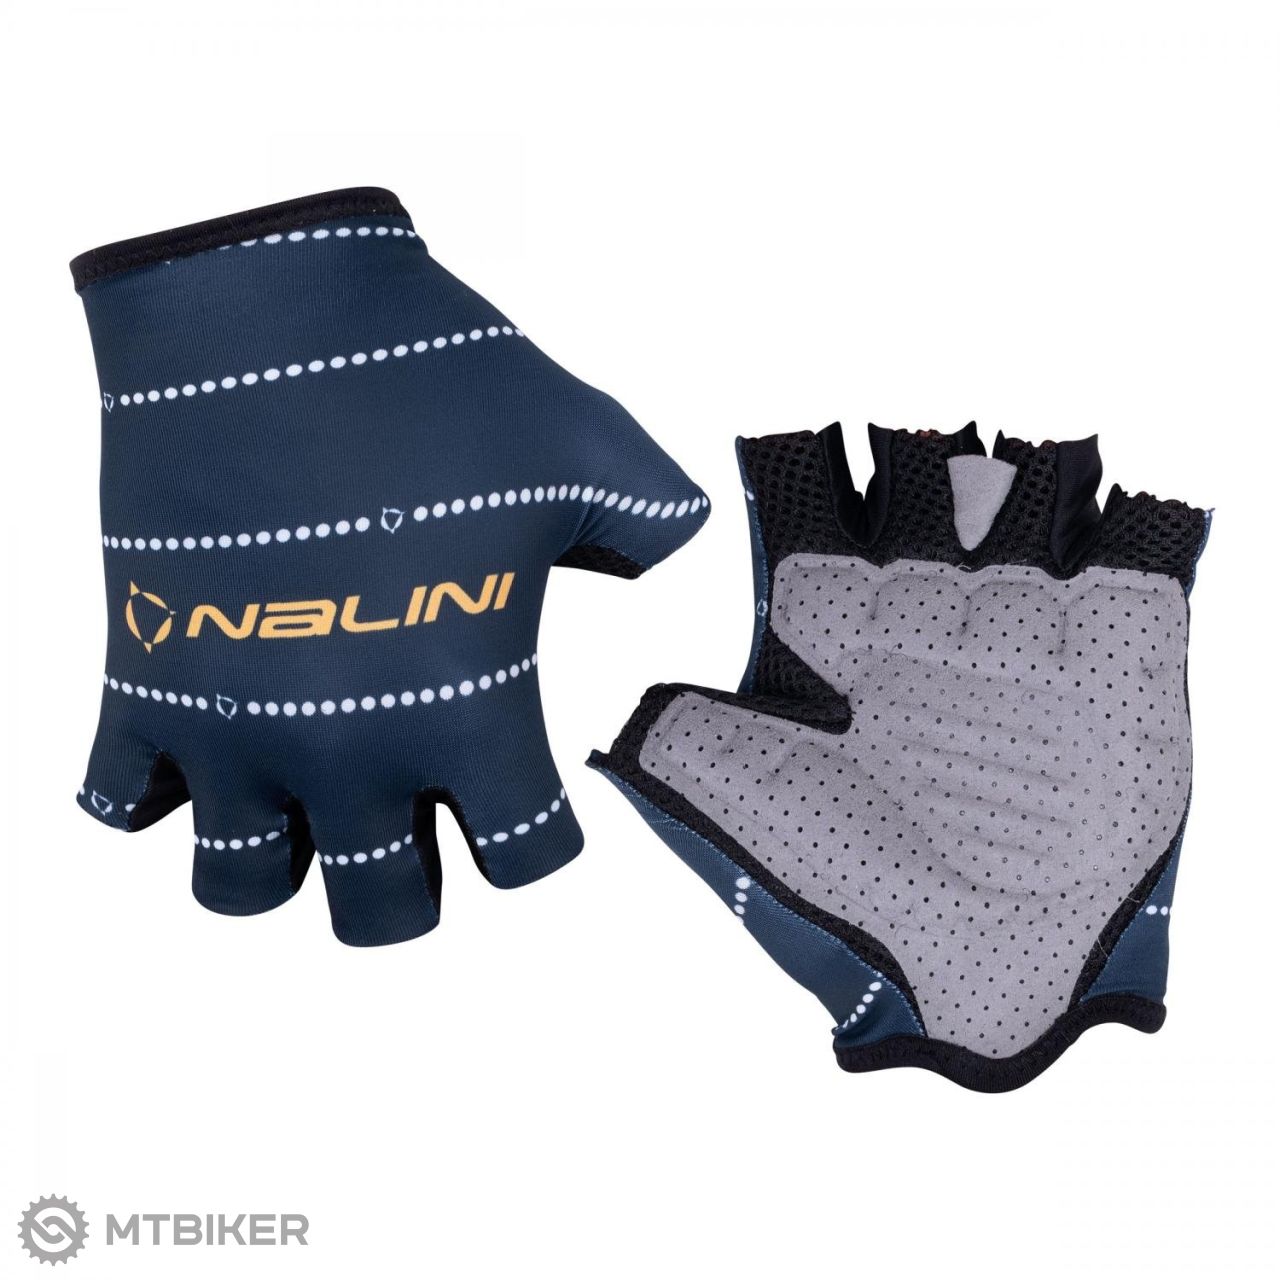 Nalini Bas Freesport-Handschuhe, dunkelblau